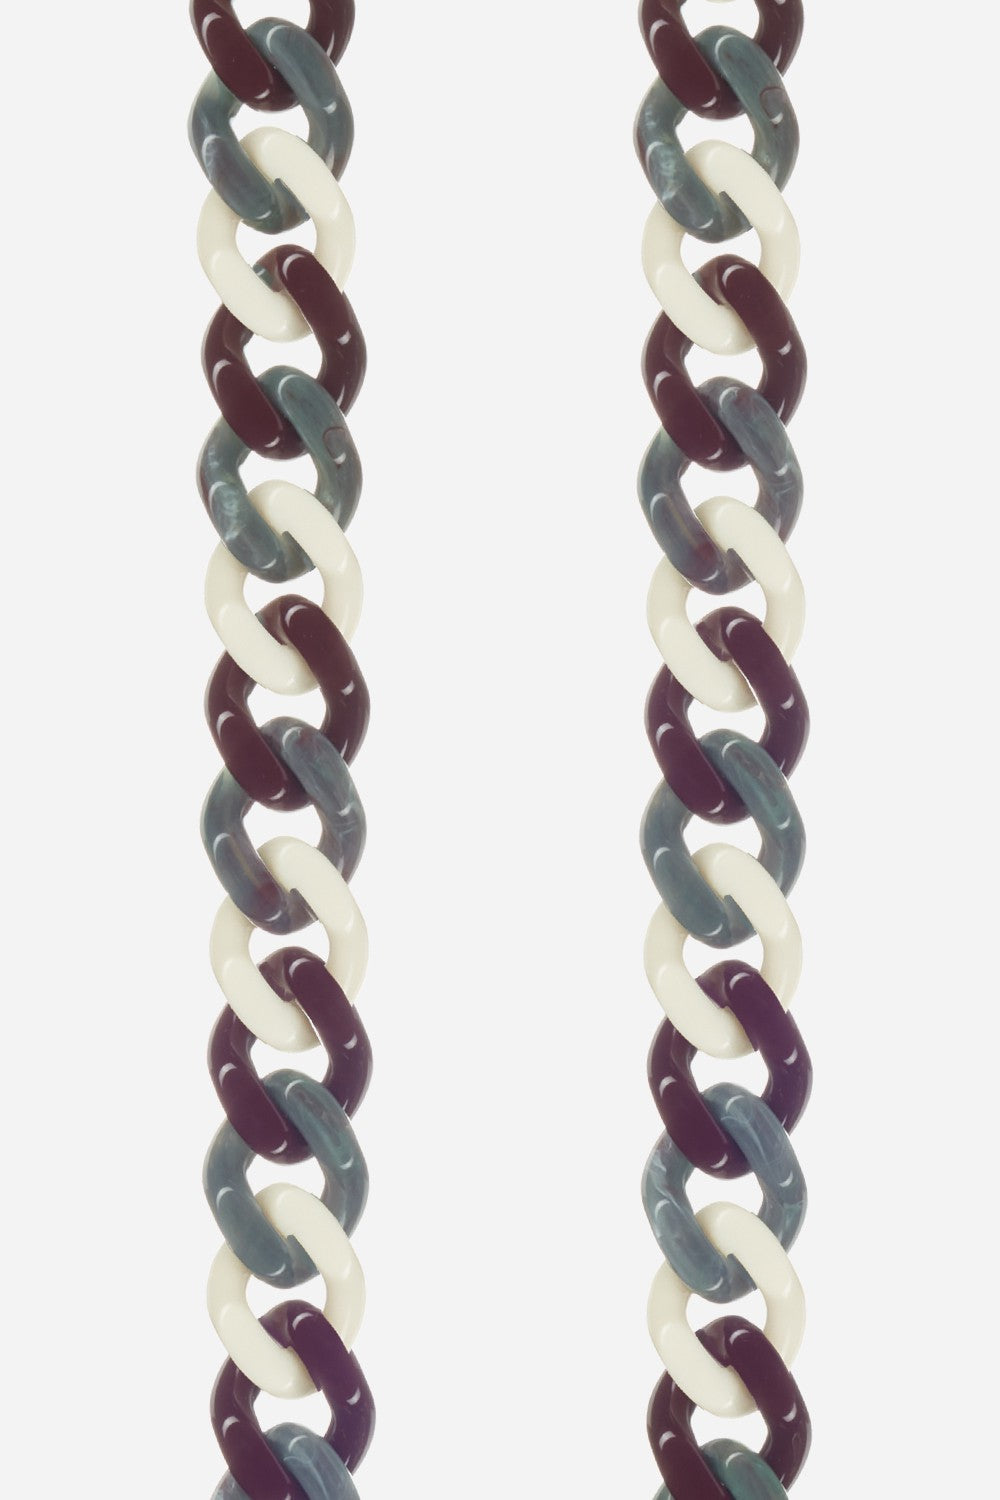 Gia Burgundy Long Chain 120 cm